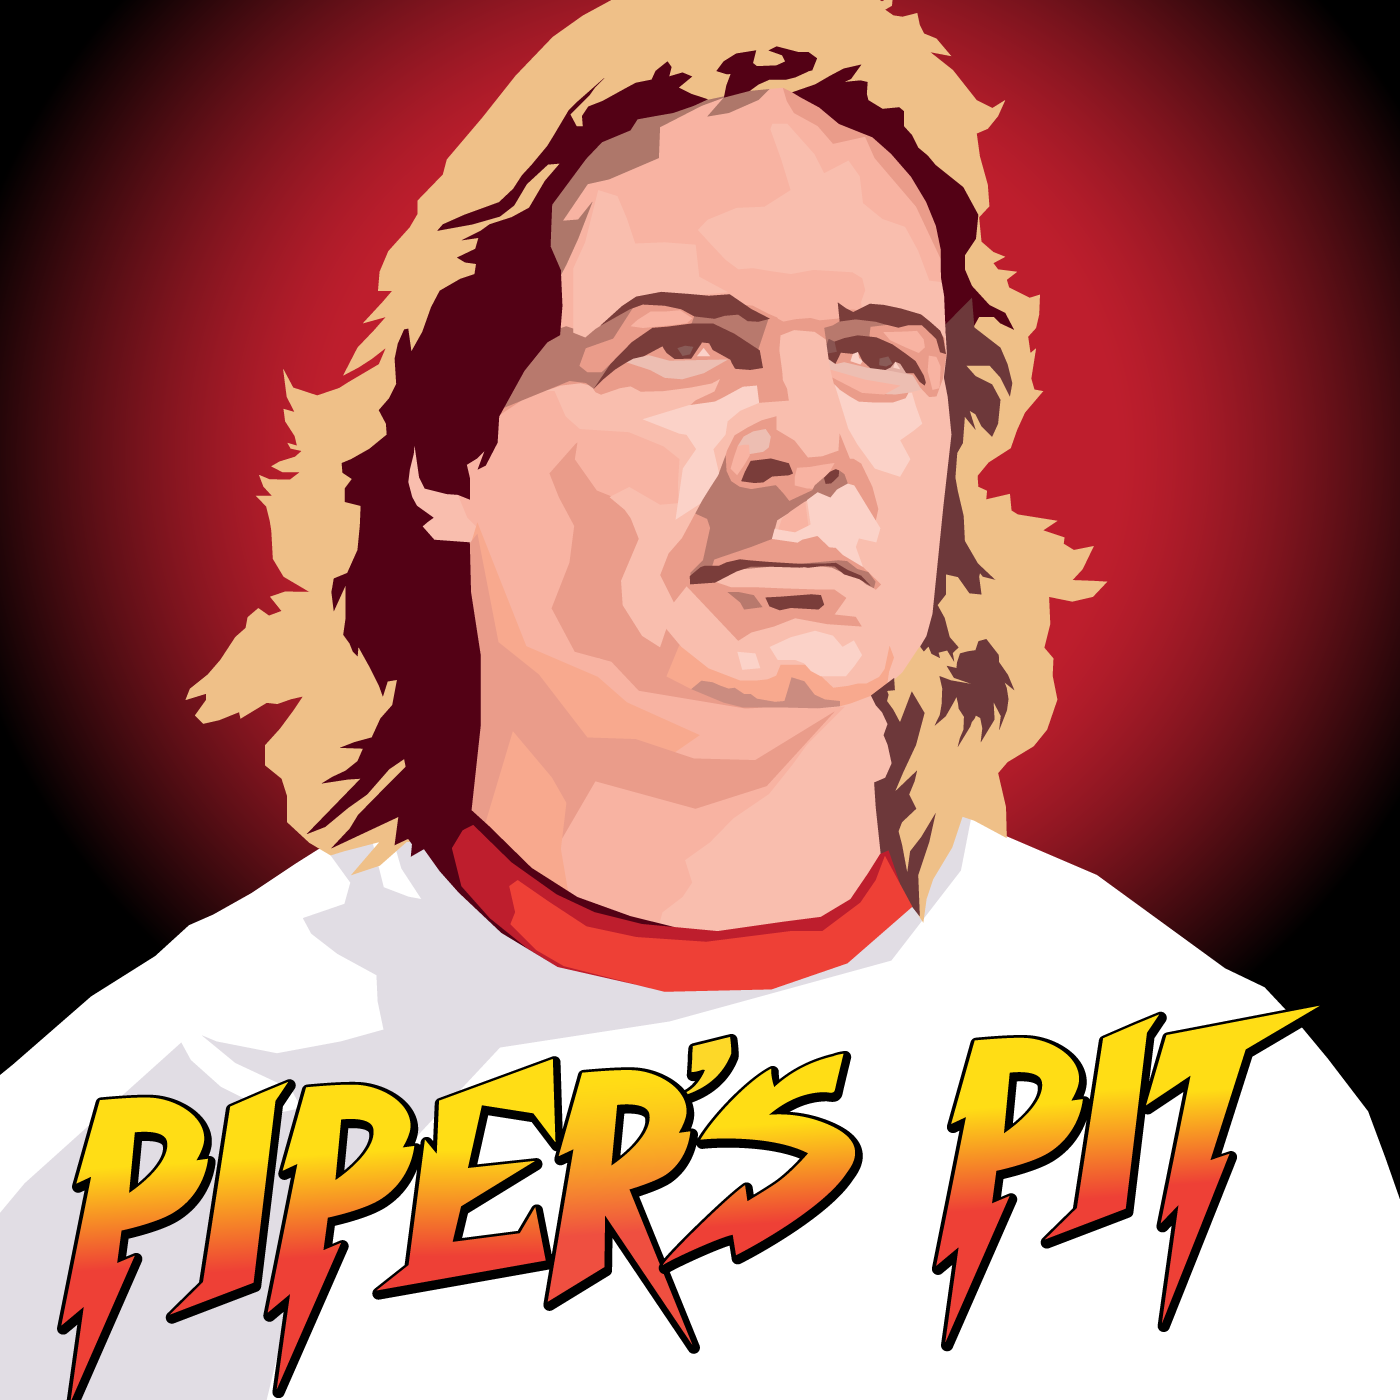 Piper's Pit